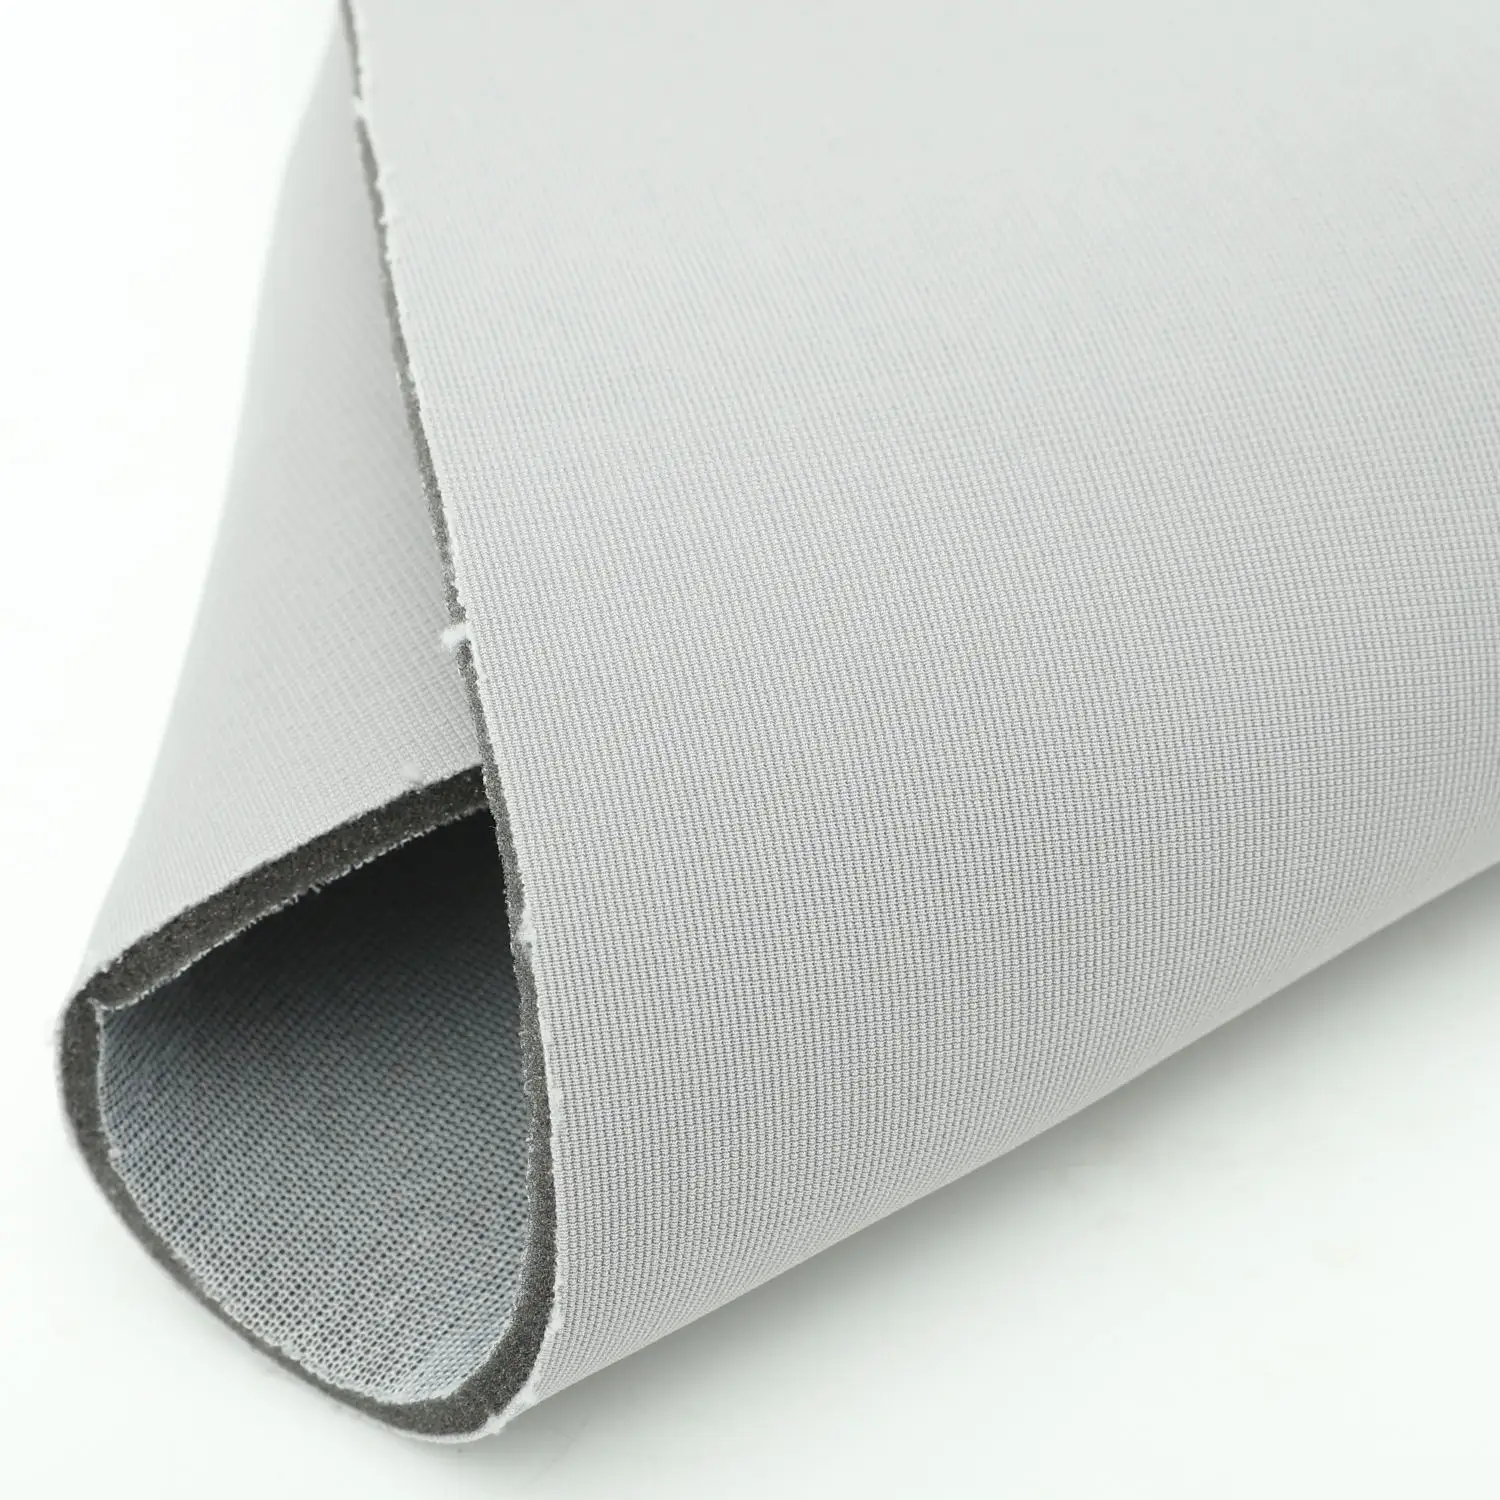 कस्टम रंग आकार 3 मिमी 5 मिमी सांस लेने योग्य पर्यावरण-अनुकूल पॉलिएस्टर बुना हुआ कस्टम फोम लेमिनेटेड कपड़ा